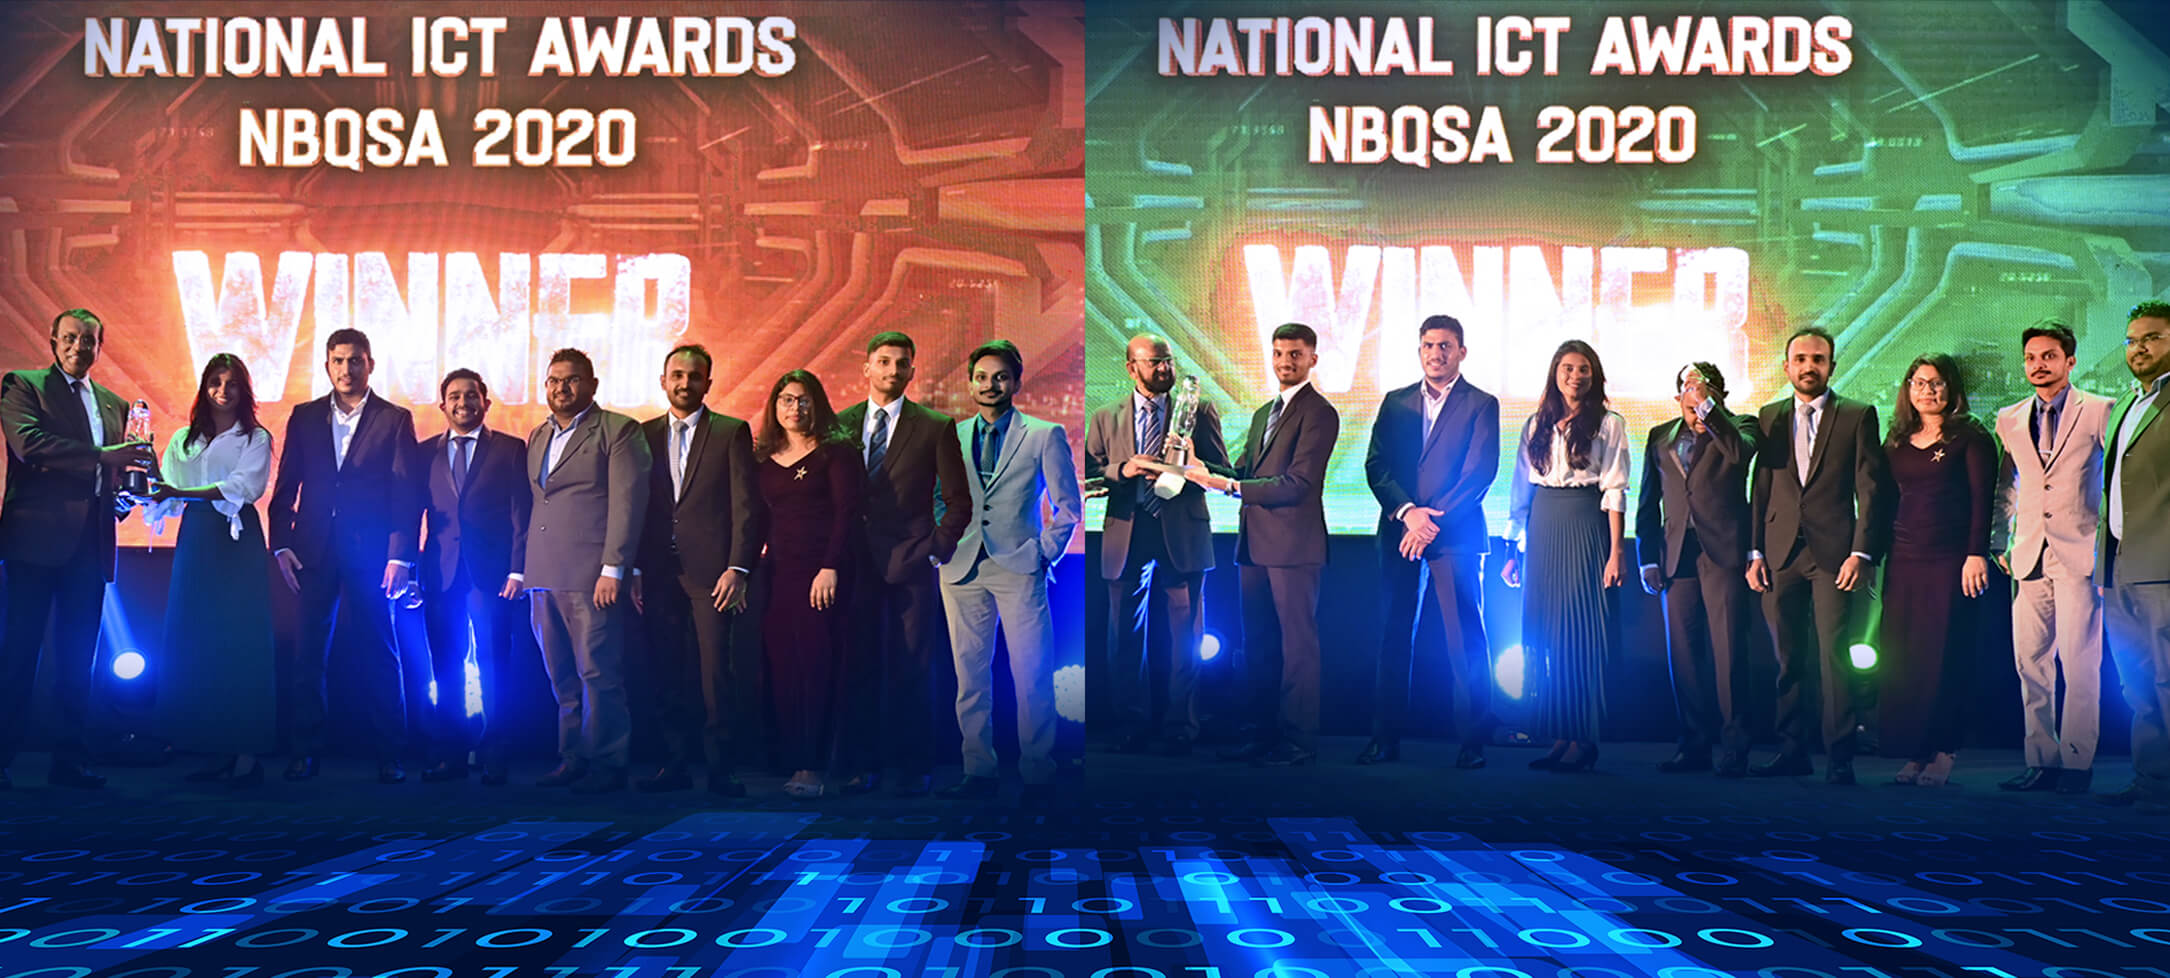 Avtra’s development arm wins prestigious national ICT Awards